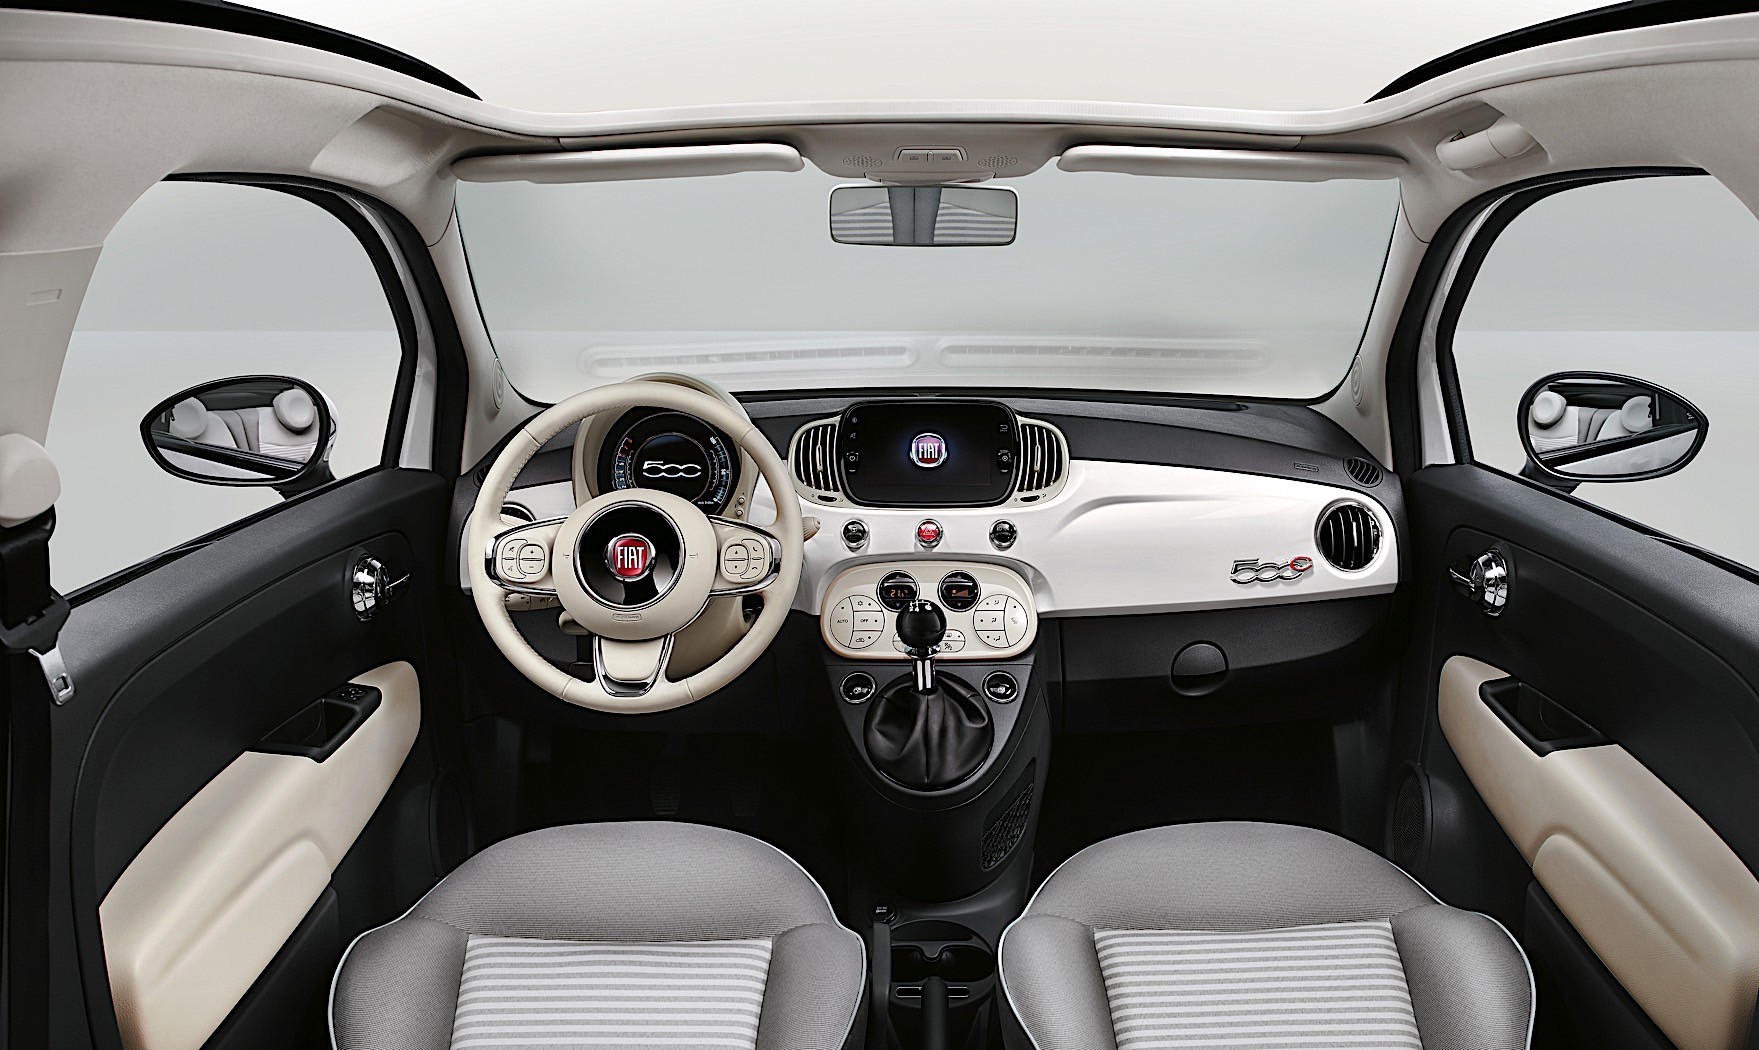 New Fiat 500 Ev Confirmed For 2020 Geneva Motor Show